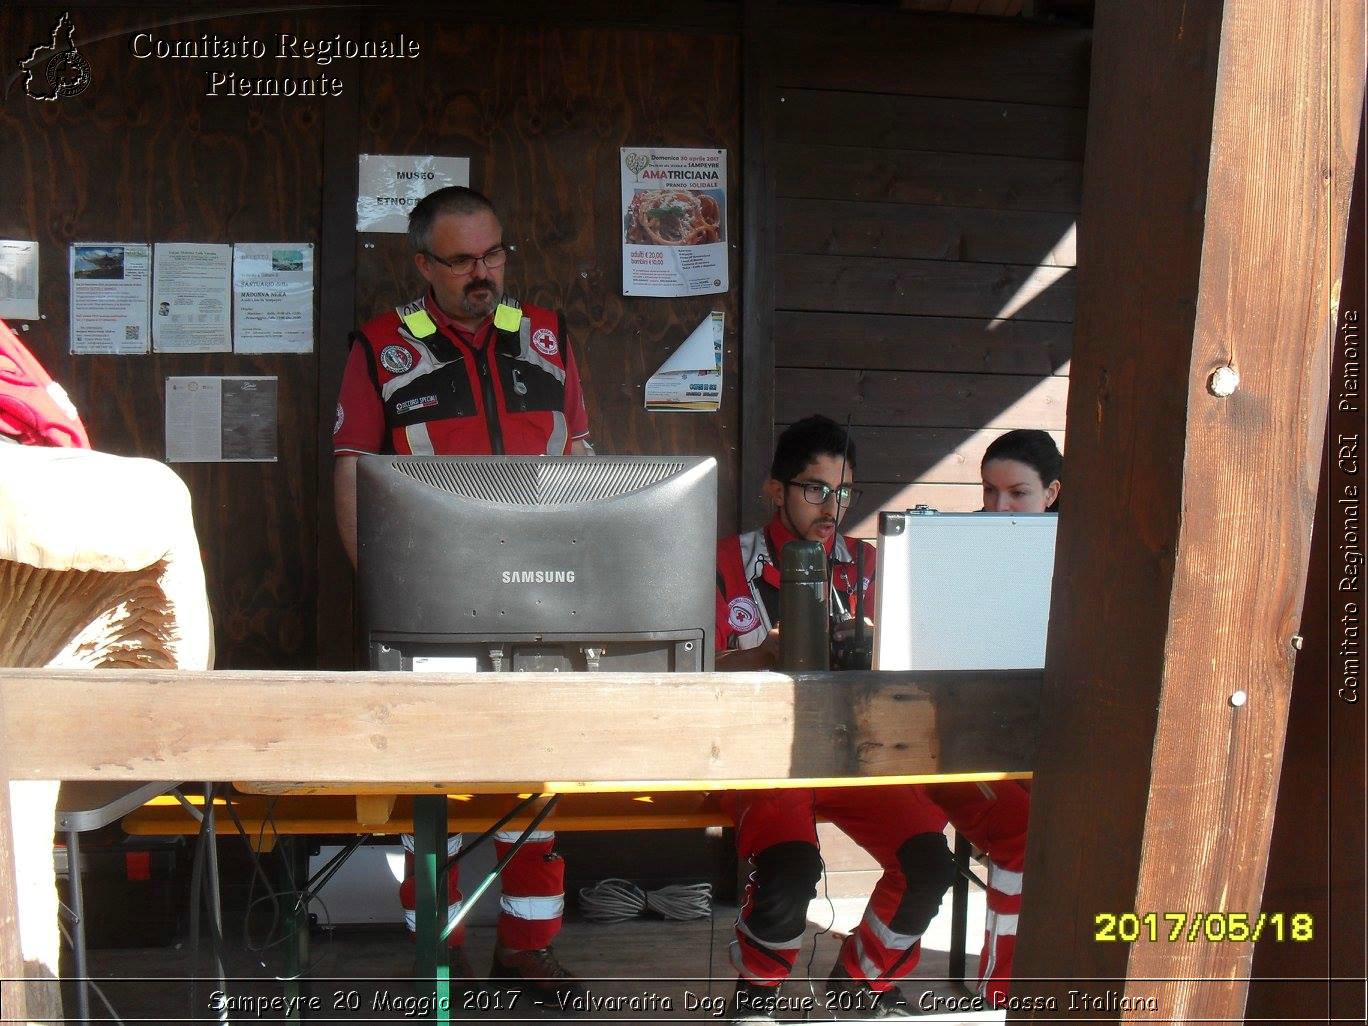 Sampeyre 20 Maggio 2017 - Valvaraita Dog Rescue 2017 - Croce Rossa Italiana- Comitato Regionale del Piemonte